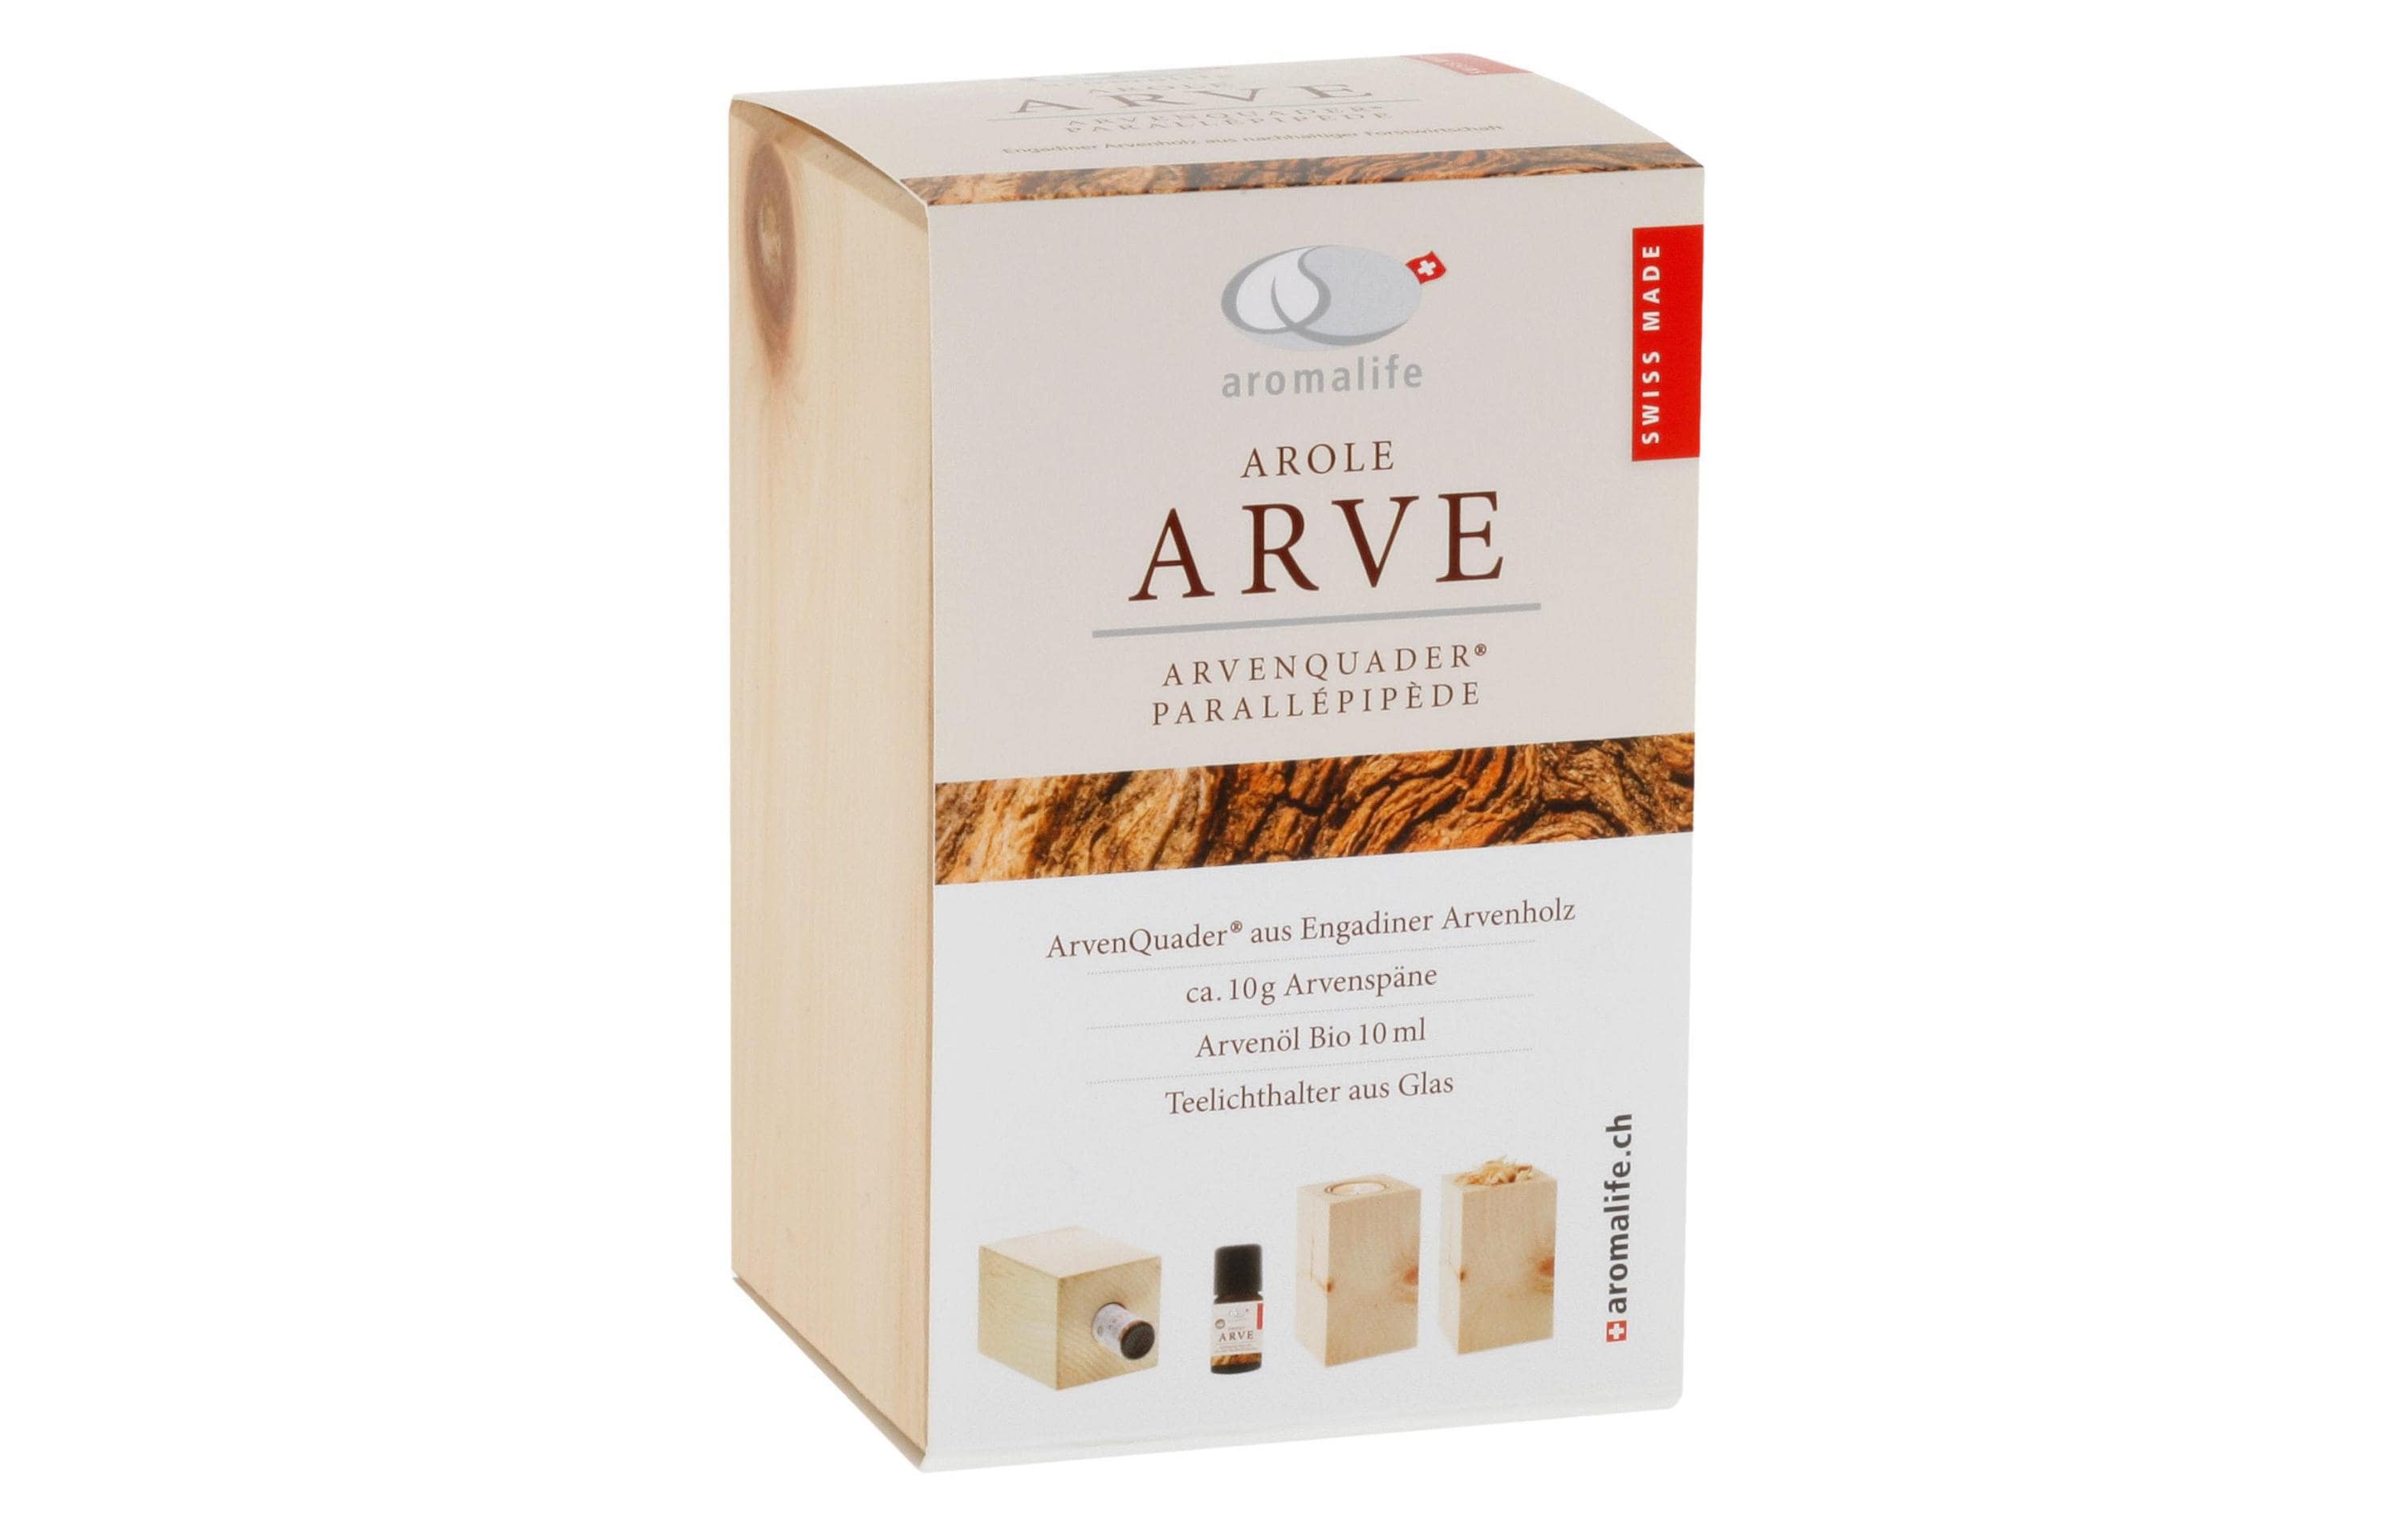 Aromalife ARVE Arvenquader